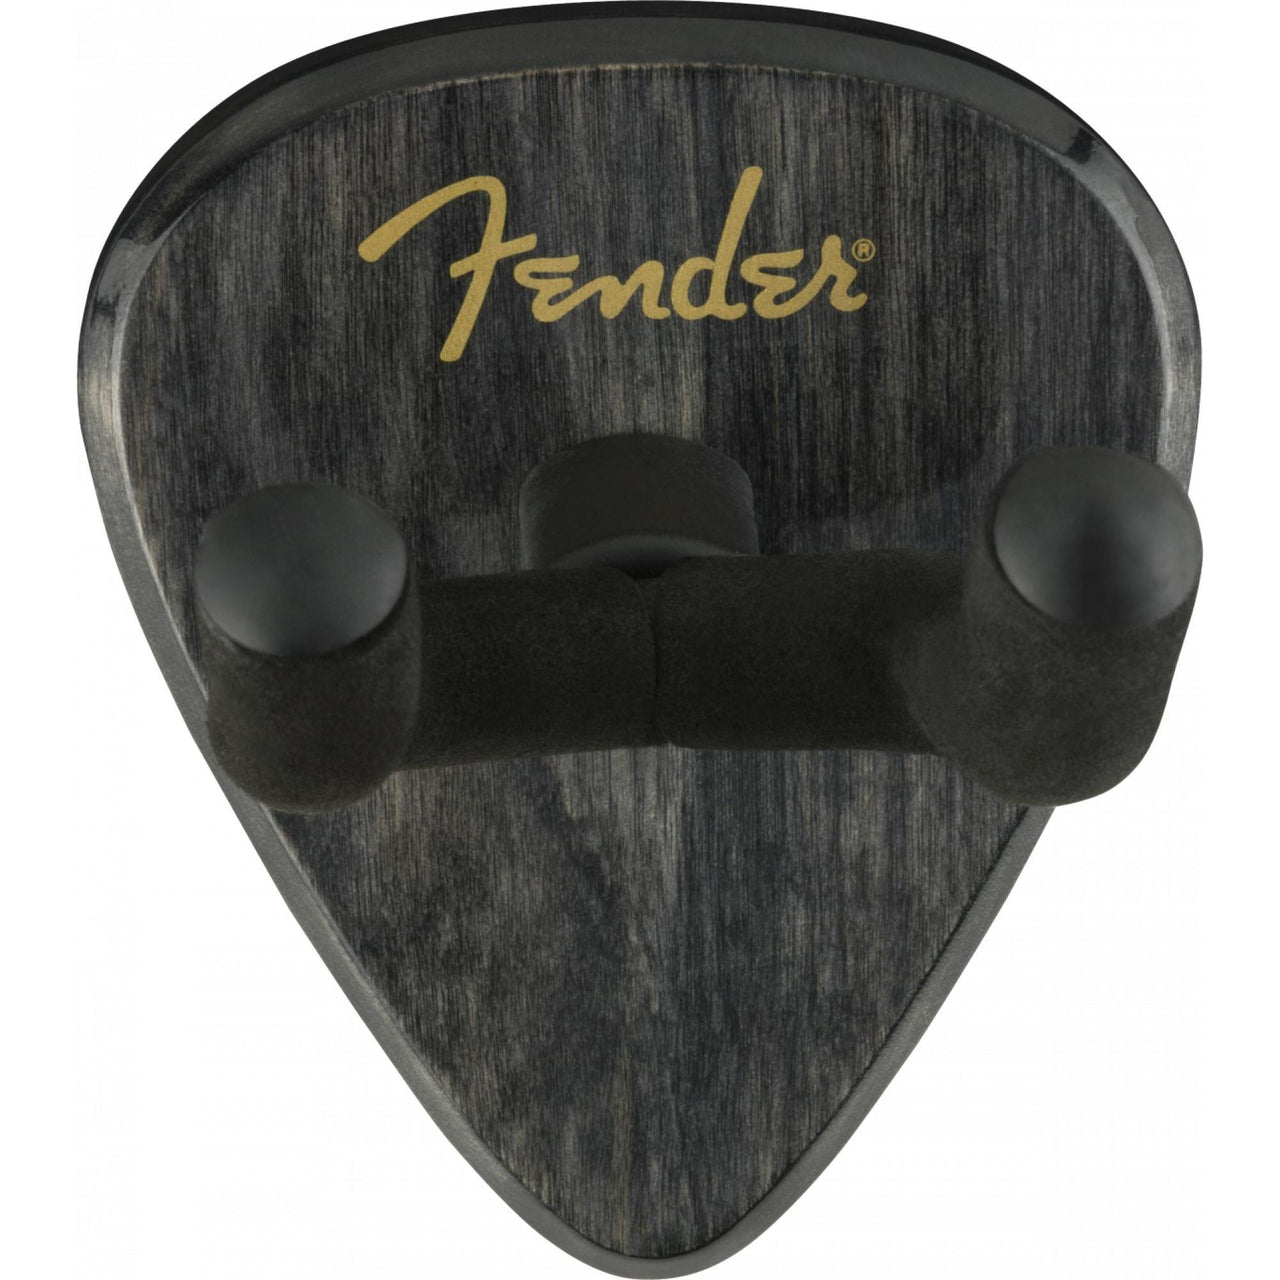 Stand Fender De Pared P/guitarra 351 Black, 0991803023